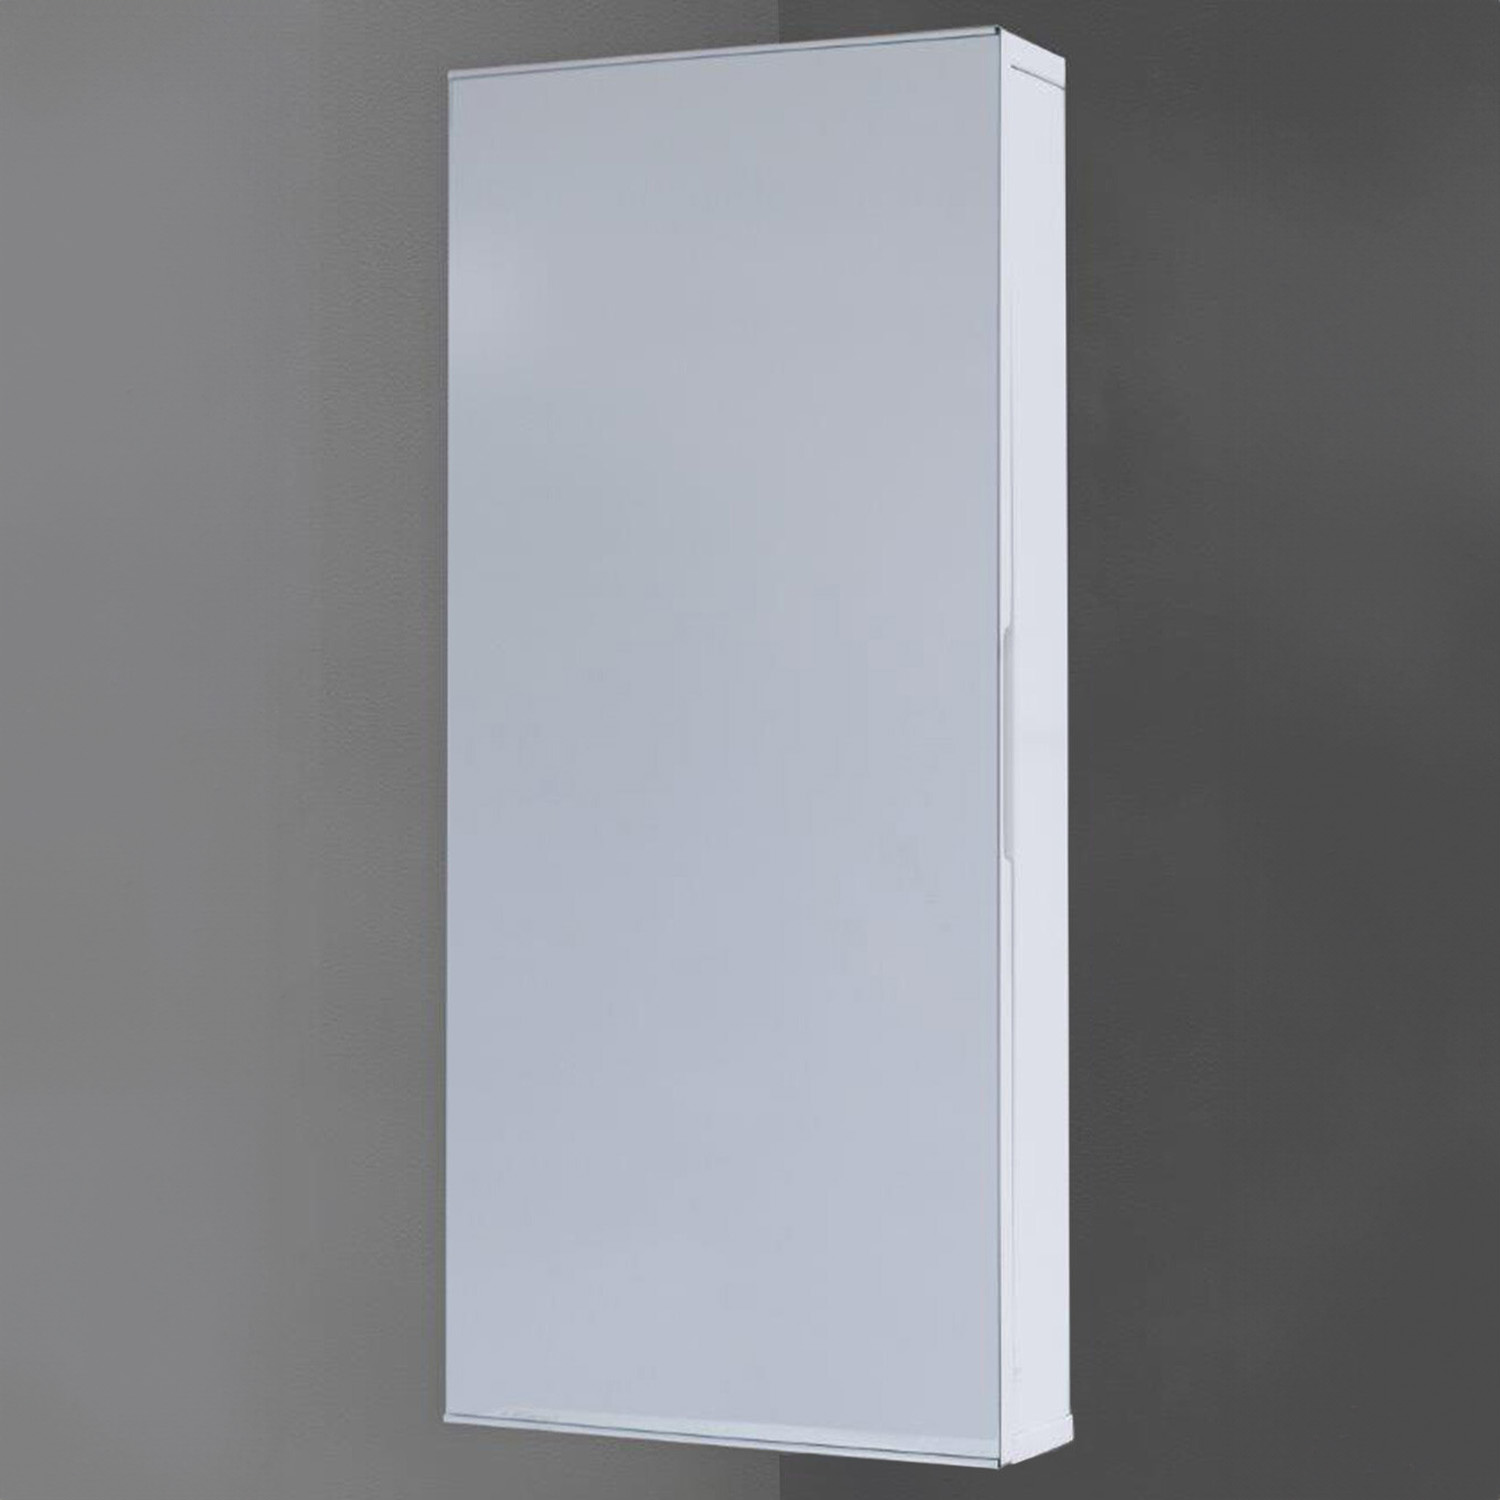 Kingston Mirror Corner Bathroom Cabinet - White Image 1